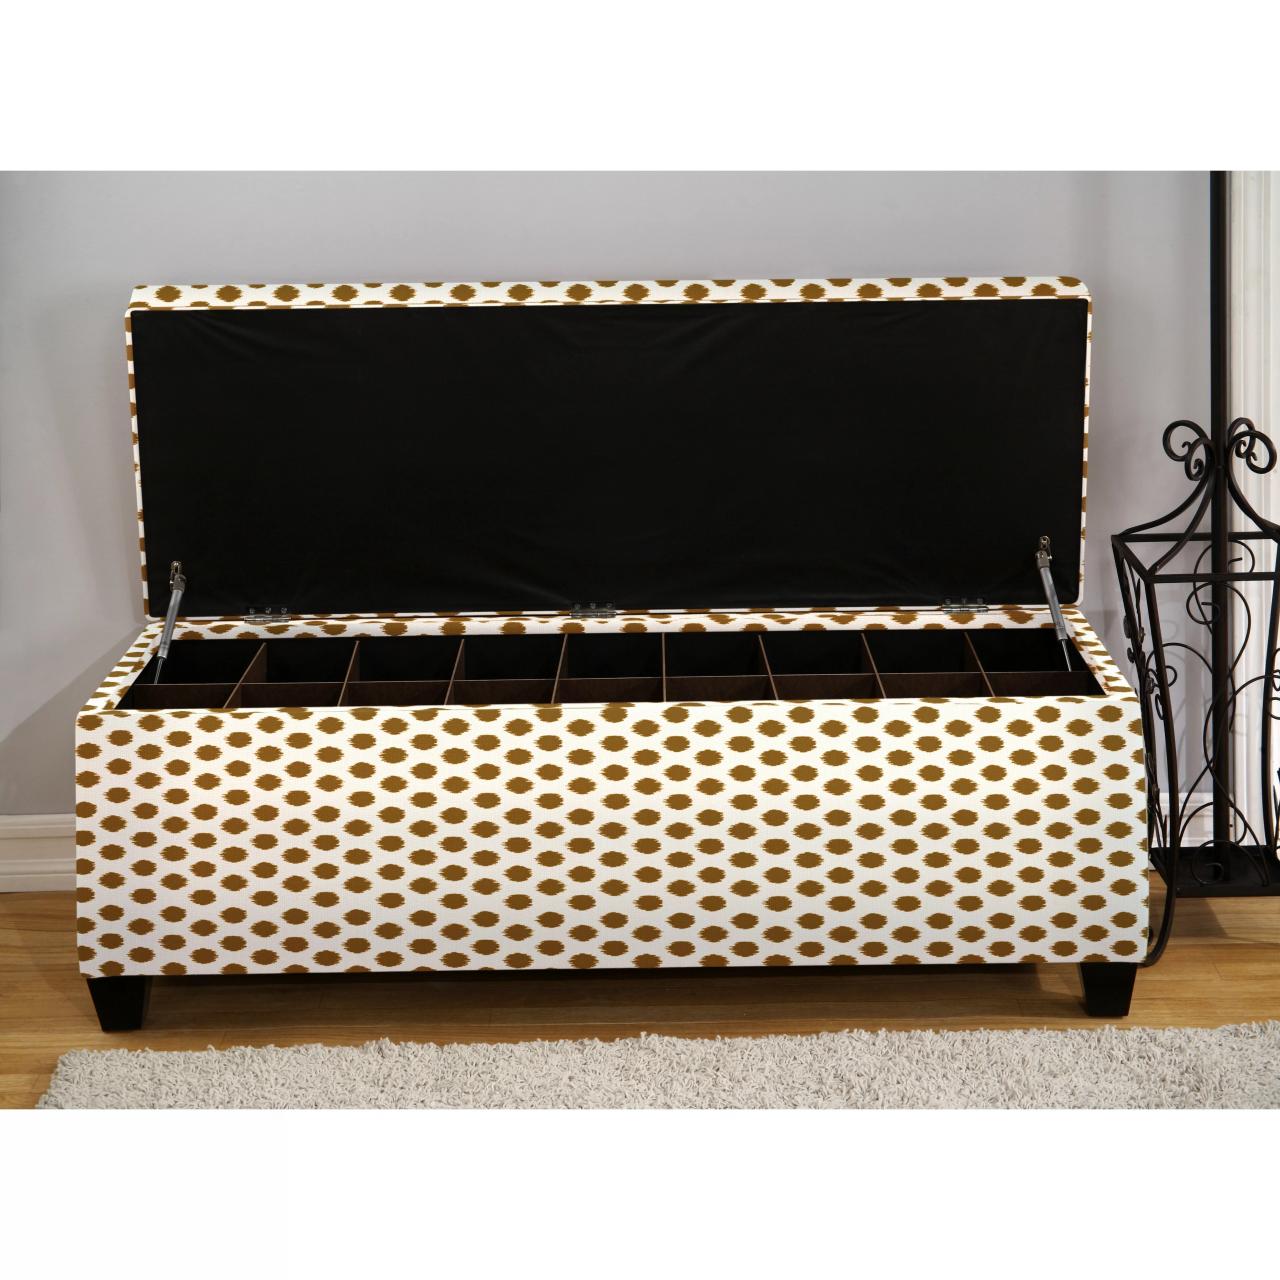 The Sole Secret Upholstered Storage Bedroom Bench & Reviews Wayfair